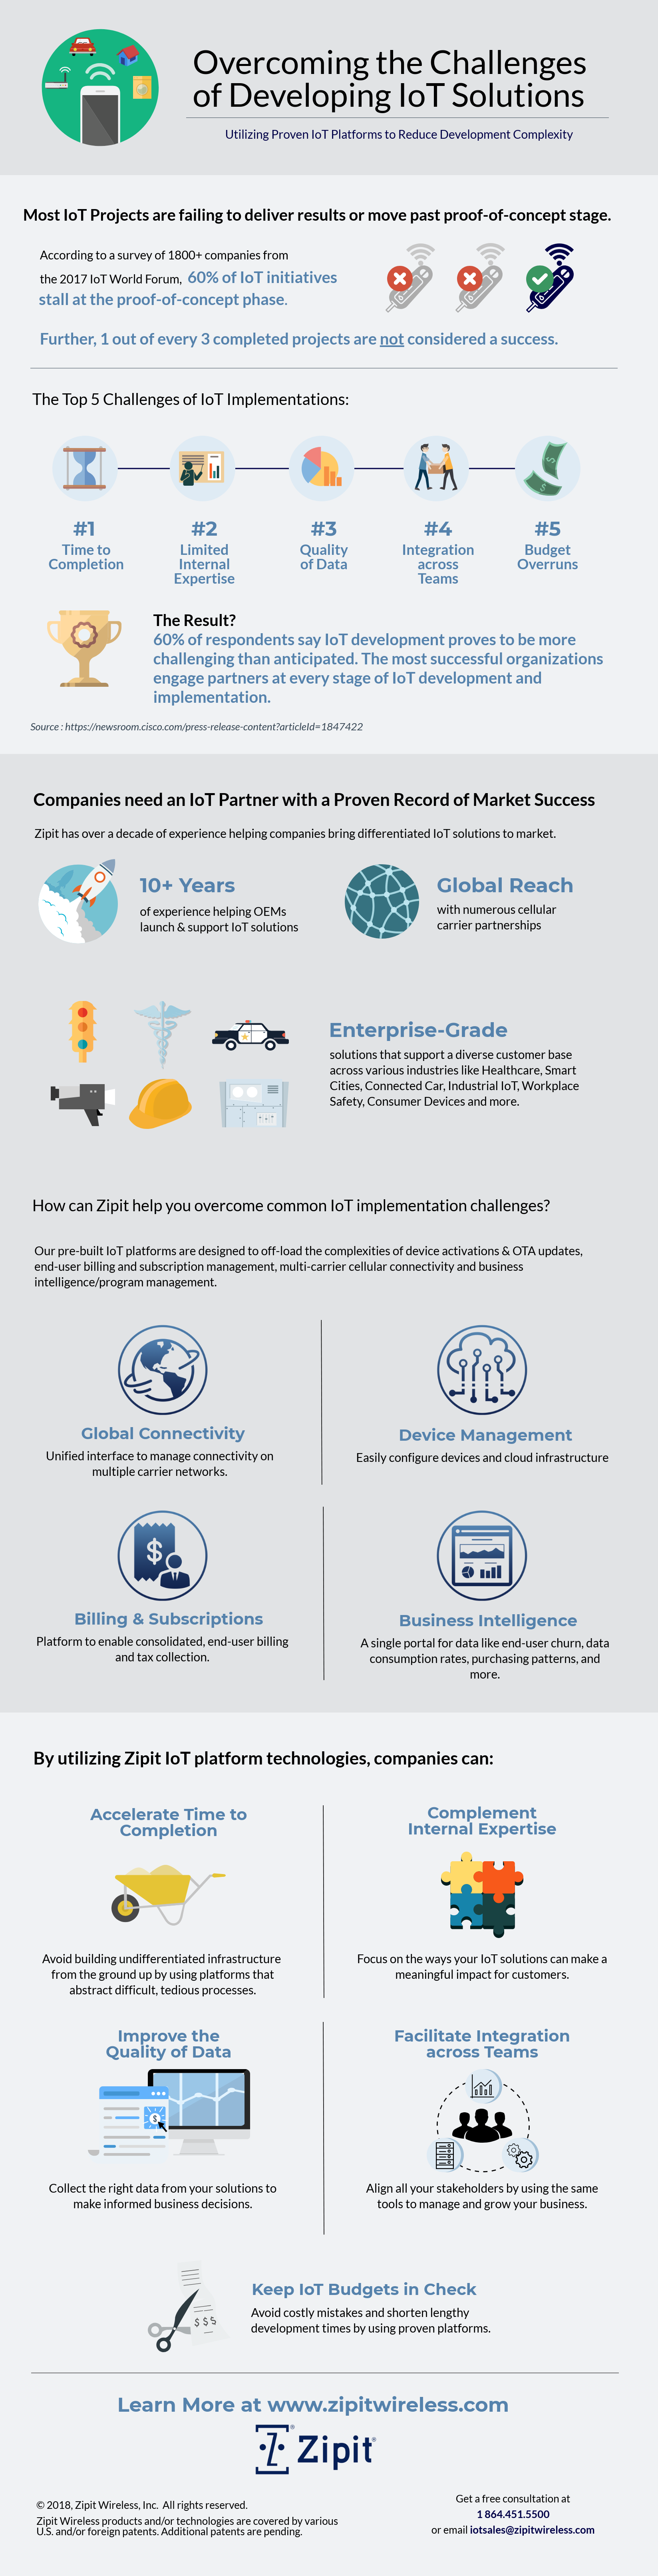 Overcoming IoT Development Challenges_infographic